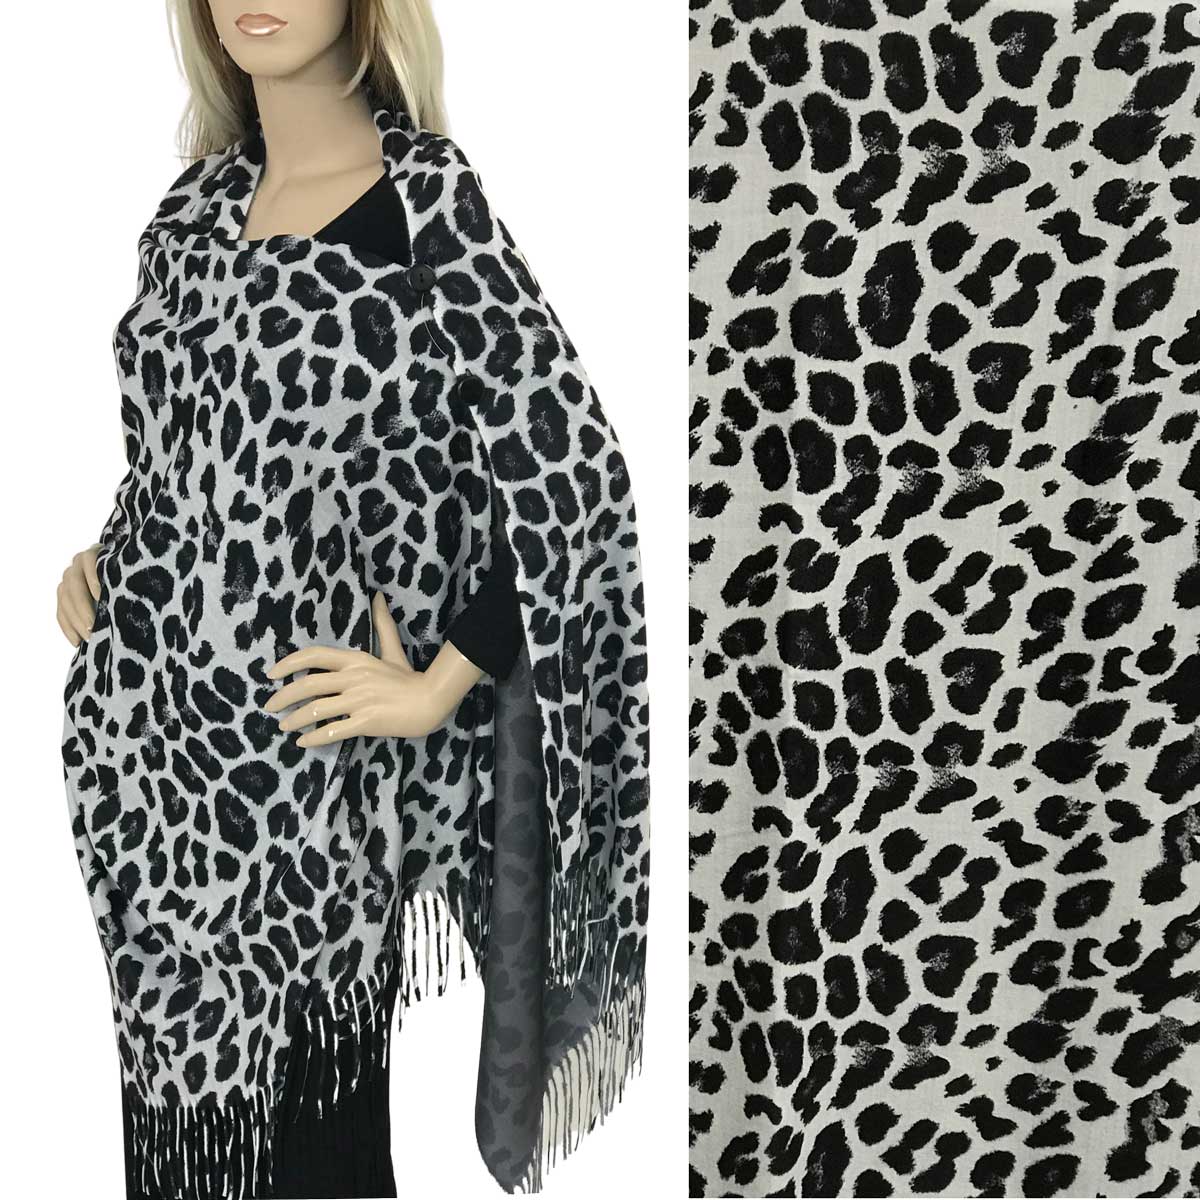 3305 - Suede Cloth Animal Print Button Shawl LEOPARD BLACK/WHITE Suede Cloth Animal Print Shawl with Buttons  - 